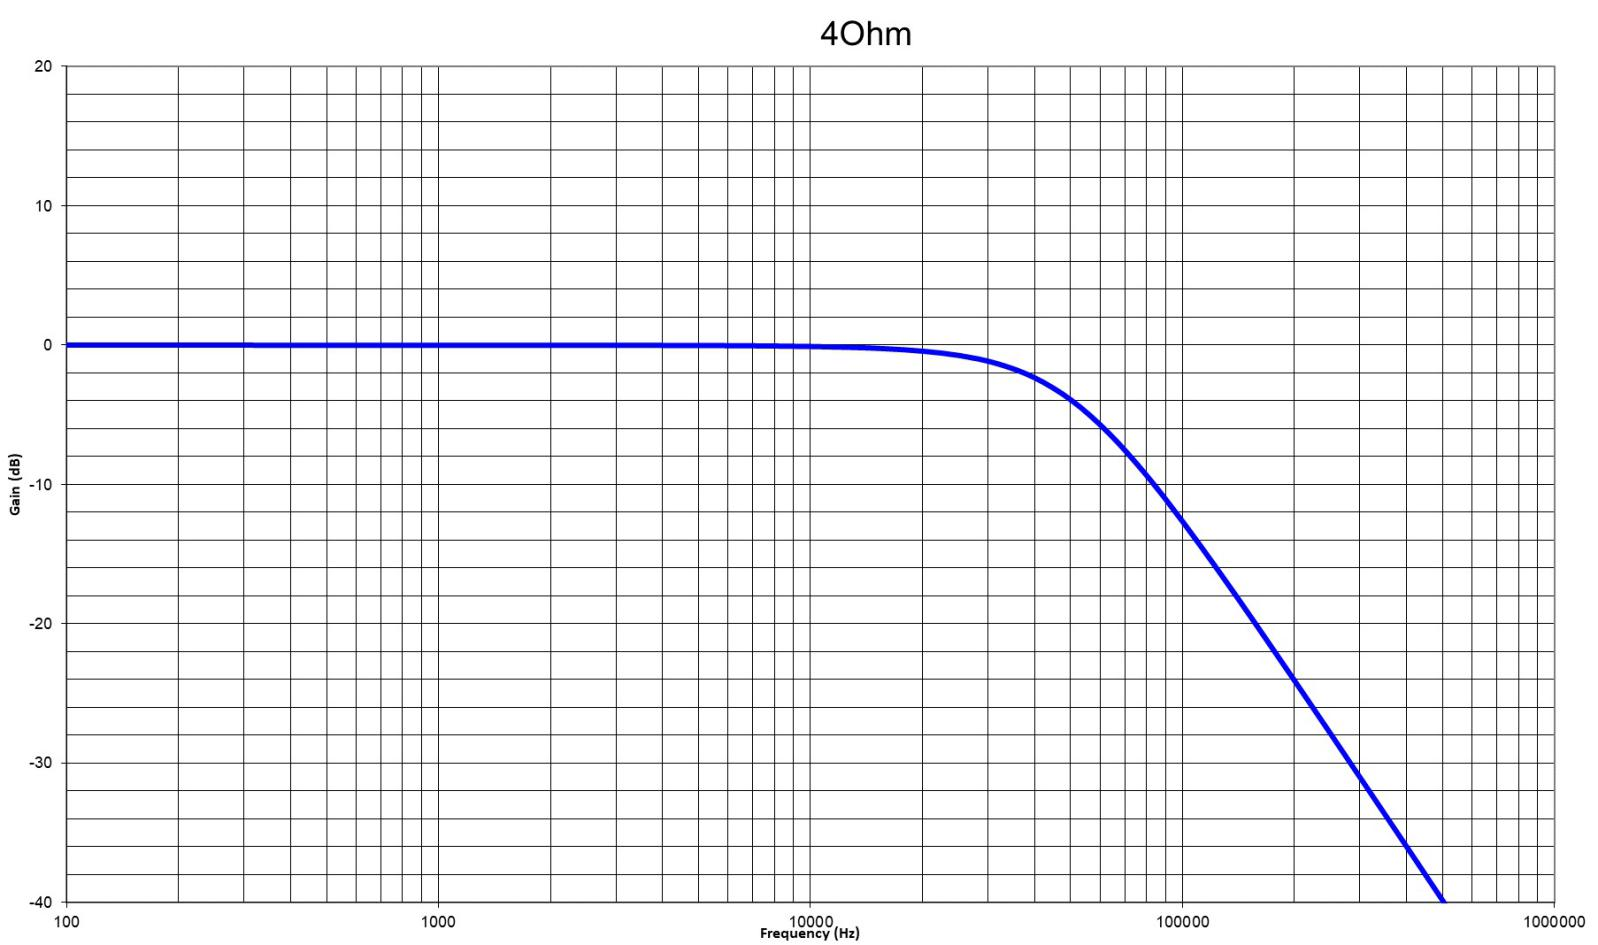 Challenges of Coil Filter Design for Automotive Class-D Amplifier